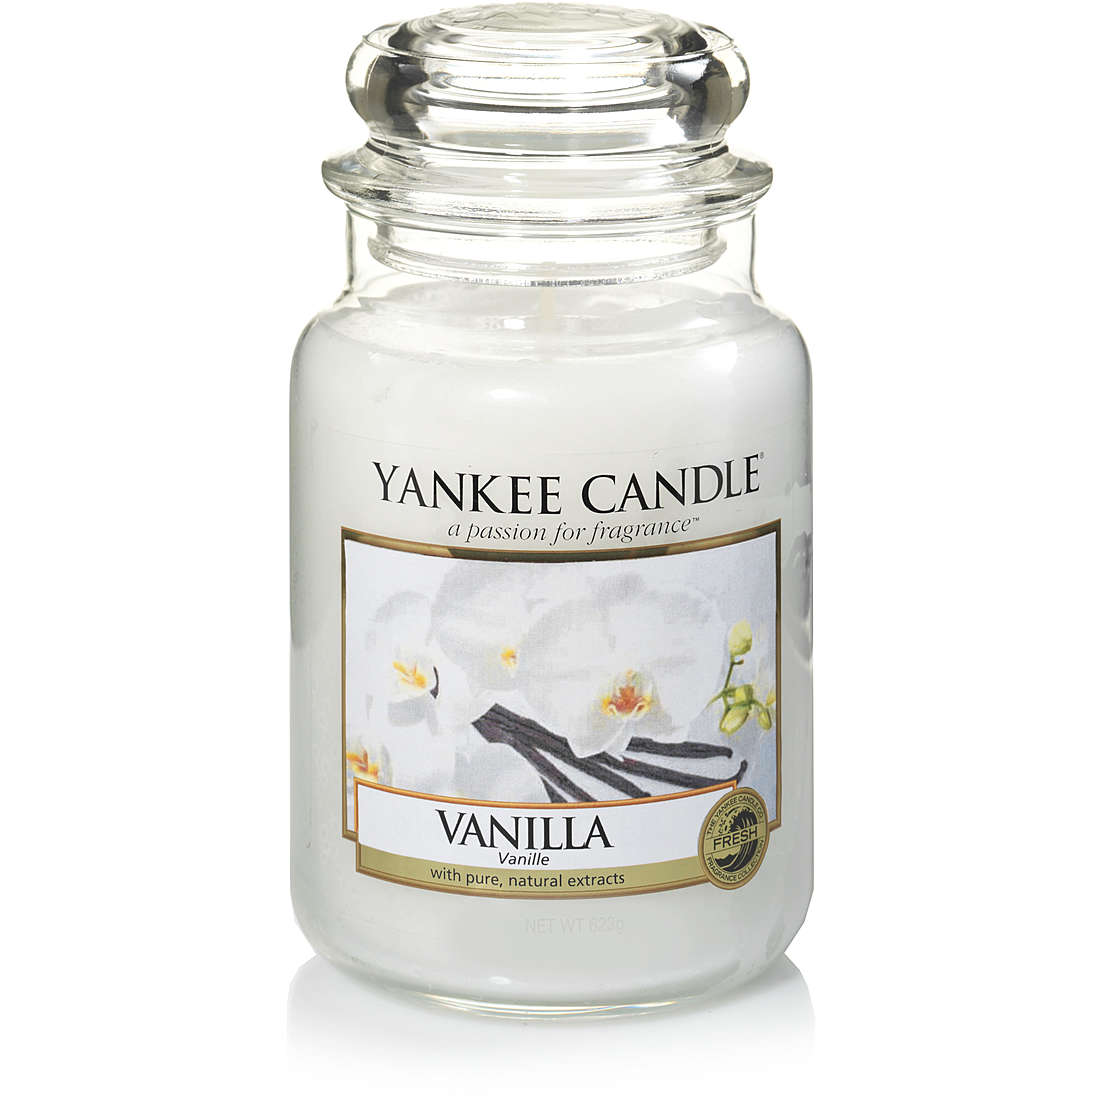 Candela Yankee Candle Giara, Grande colore Bianco 1507743E